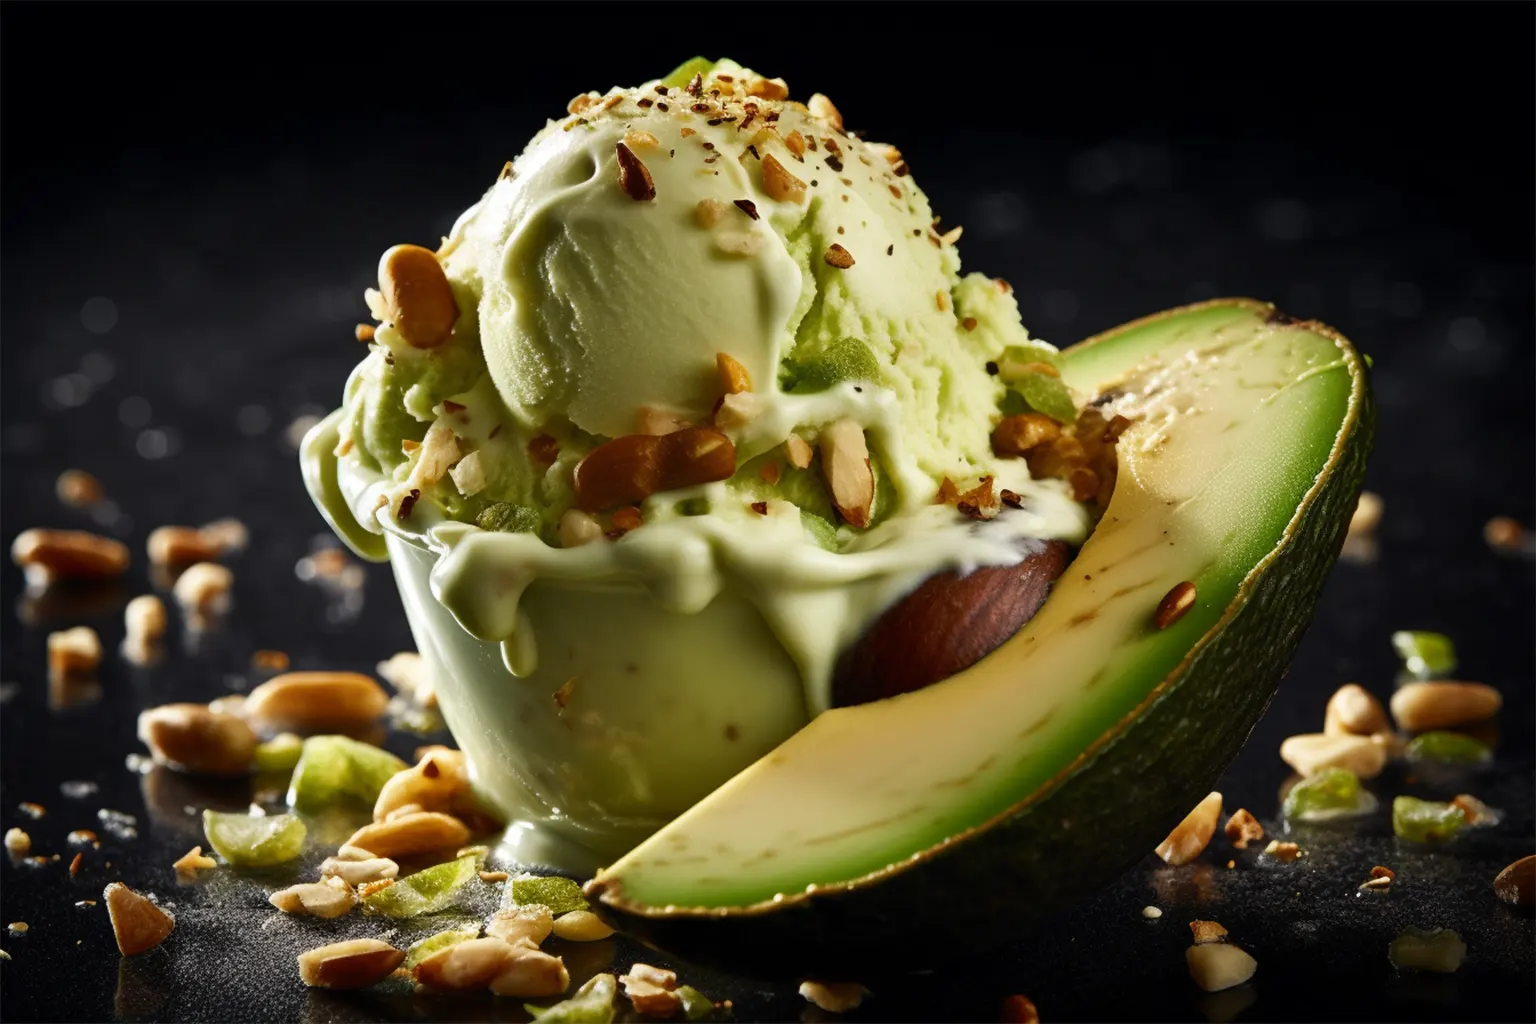 Avocado Ice Cream with Sesame Brittle